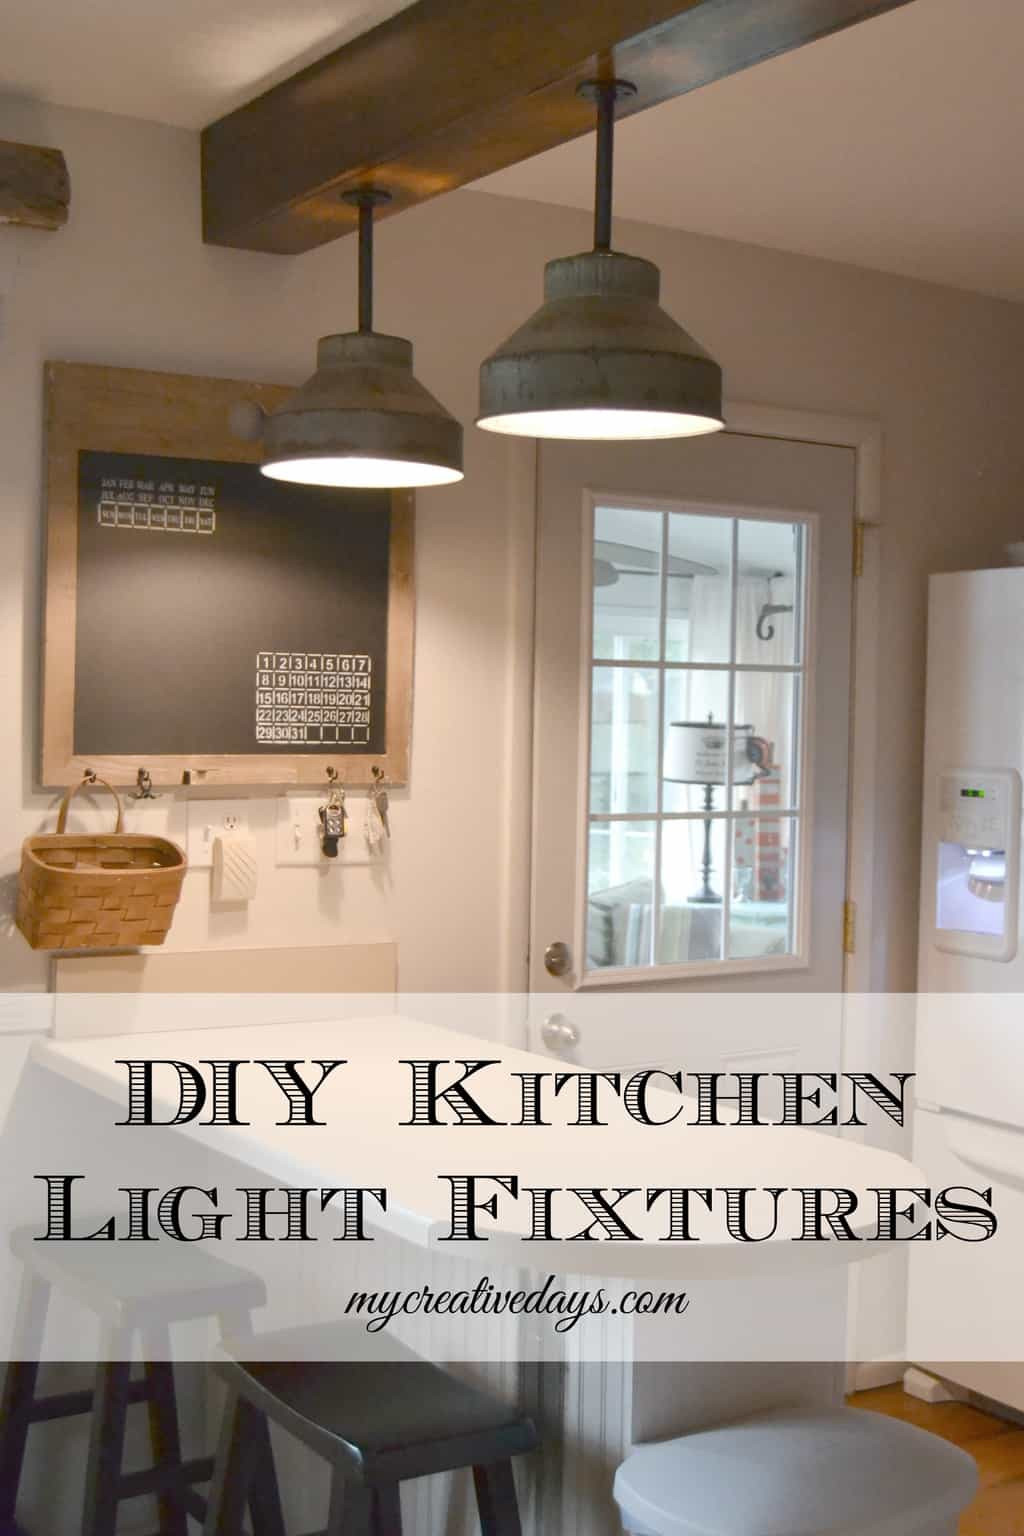 Best ideas about Kitchen Light Fixtures
. Save or Pin DIY Kitchen Light Fixtures Part 2 My Creative Days Now.